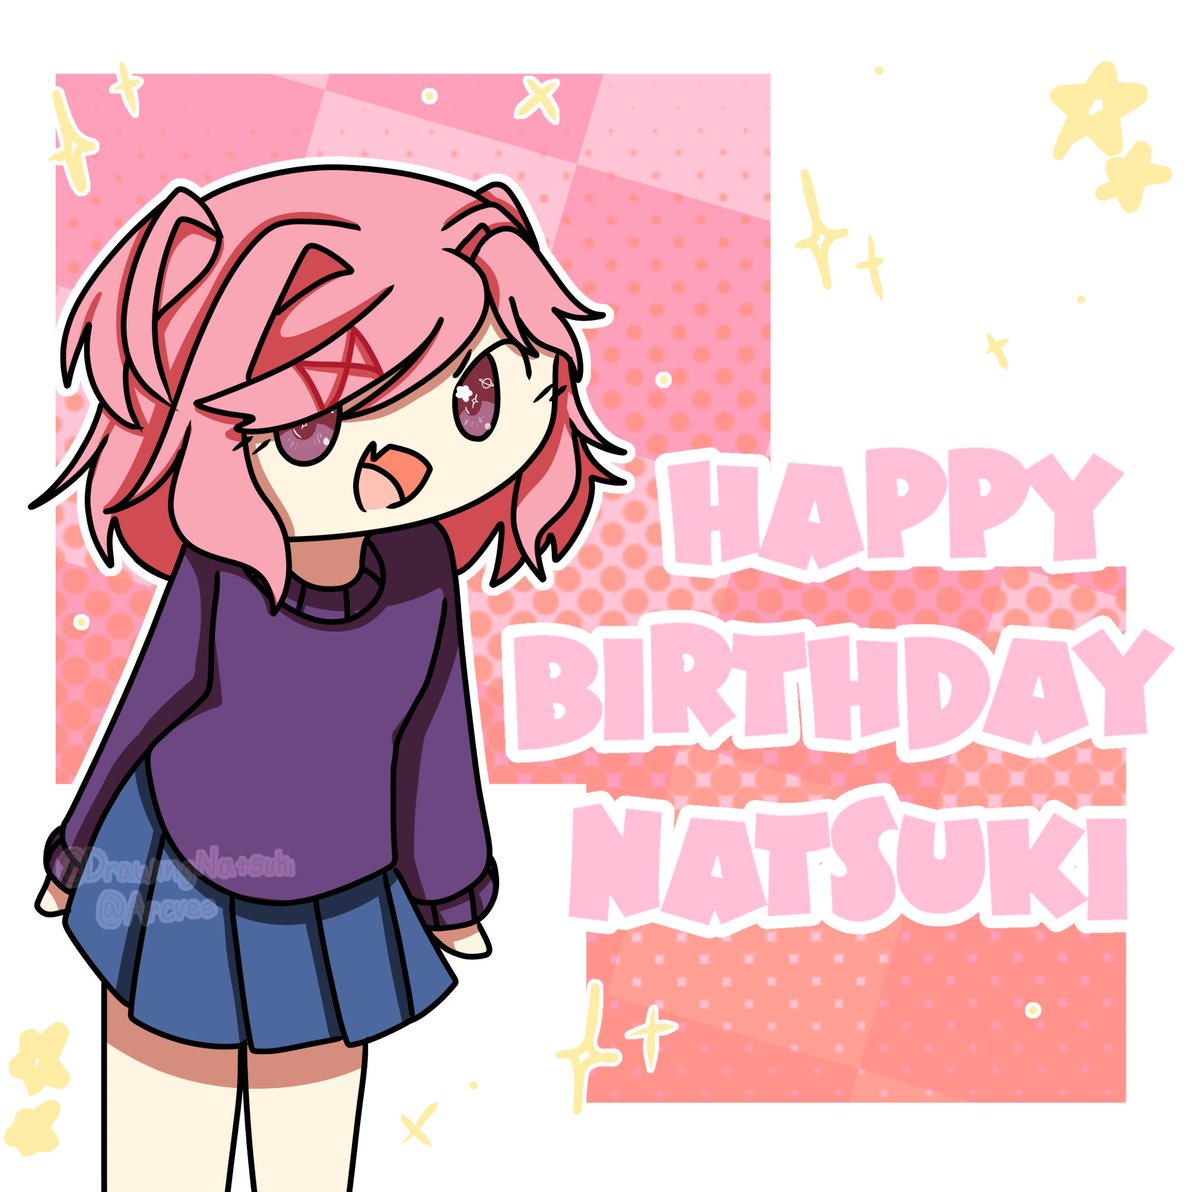 Day 165!

Happy birthday Natsuki!!!! (happy national cupcake day)

#ddlc #DokiDokiLiteratureClub #natsuki #ddlcnatsuki  #drawingnatsukieveryday #NationalCupcakeDay